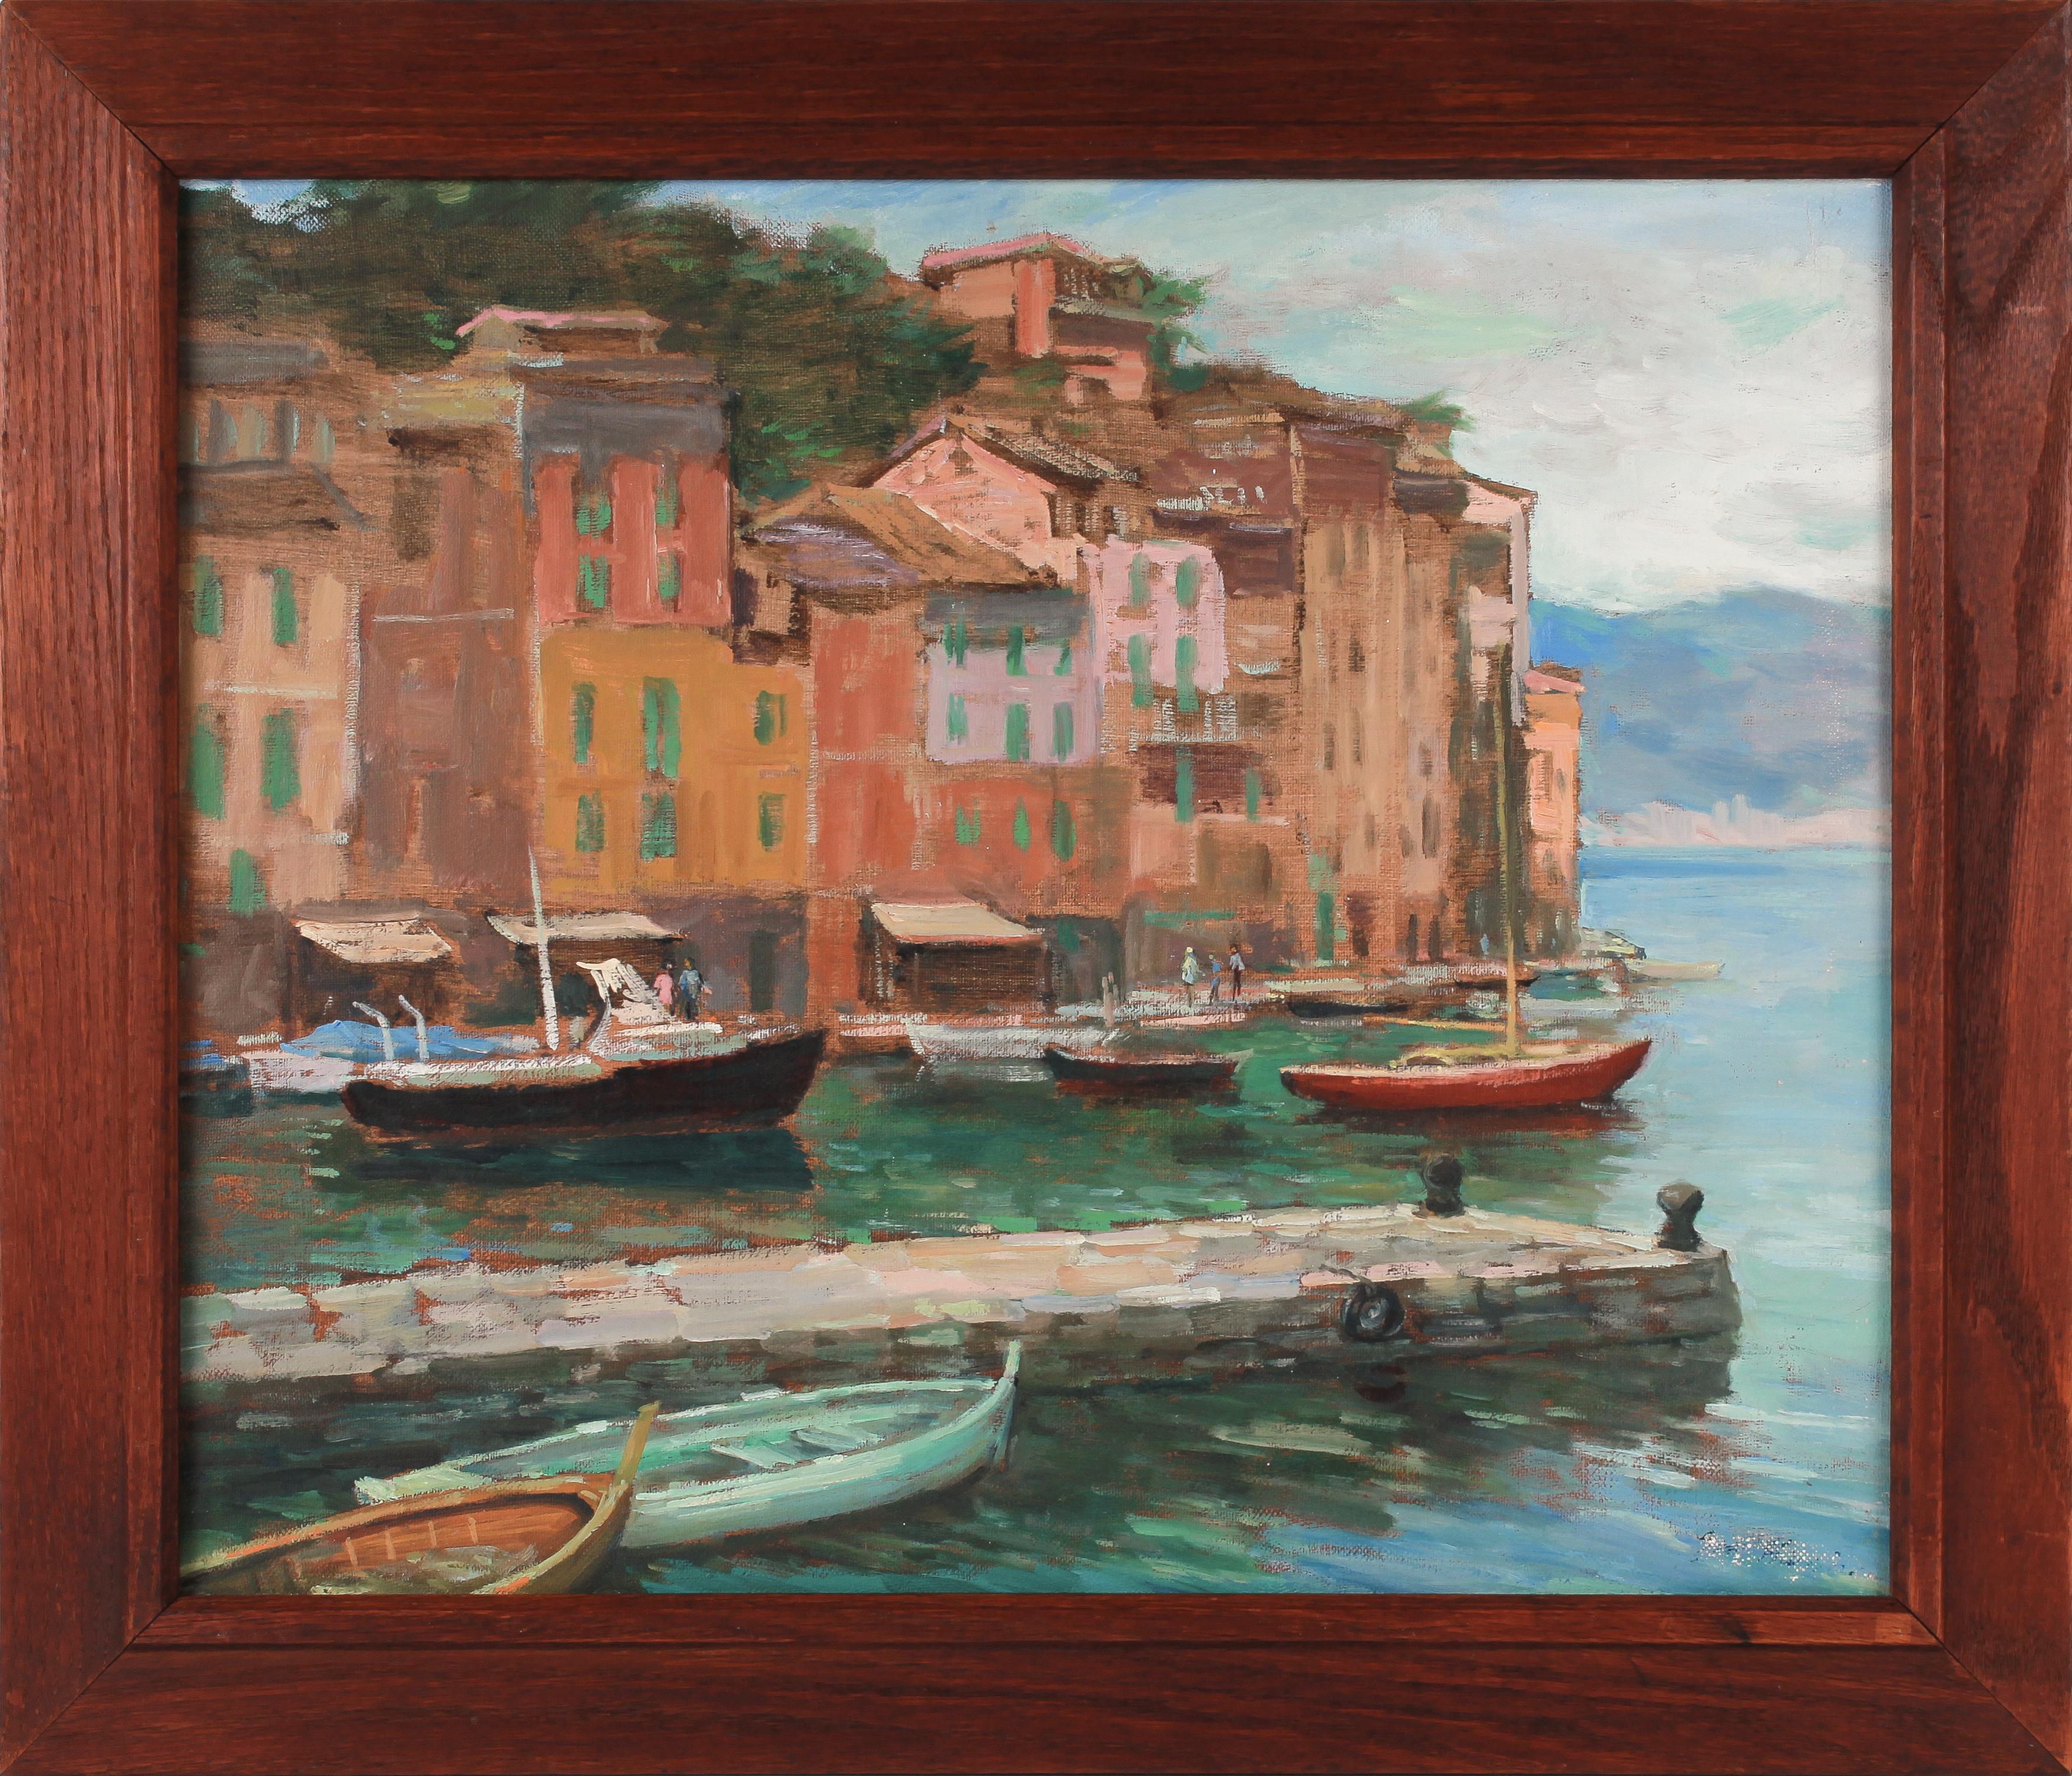 Sam Hugh Harris Landscape Painting - "Portofino Afternoon" 20th Century European Oil